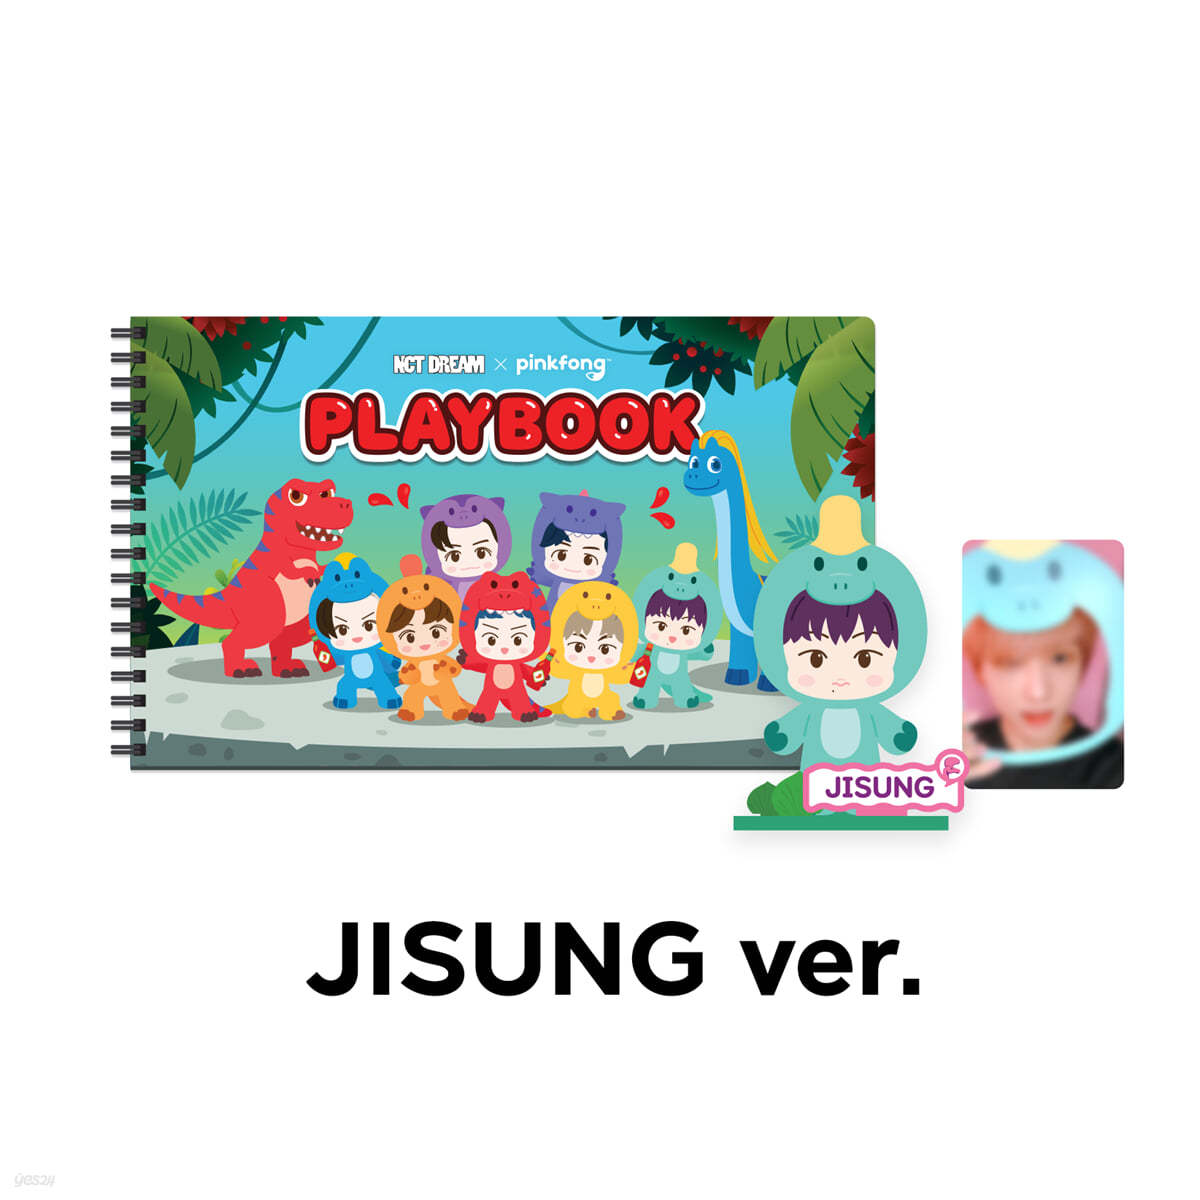 [JISUNG] PLAYBOOK SET - NCT DREAM X PINKFONG